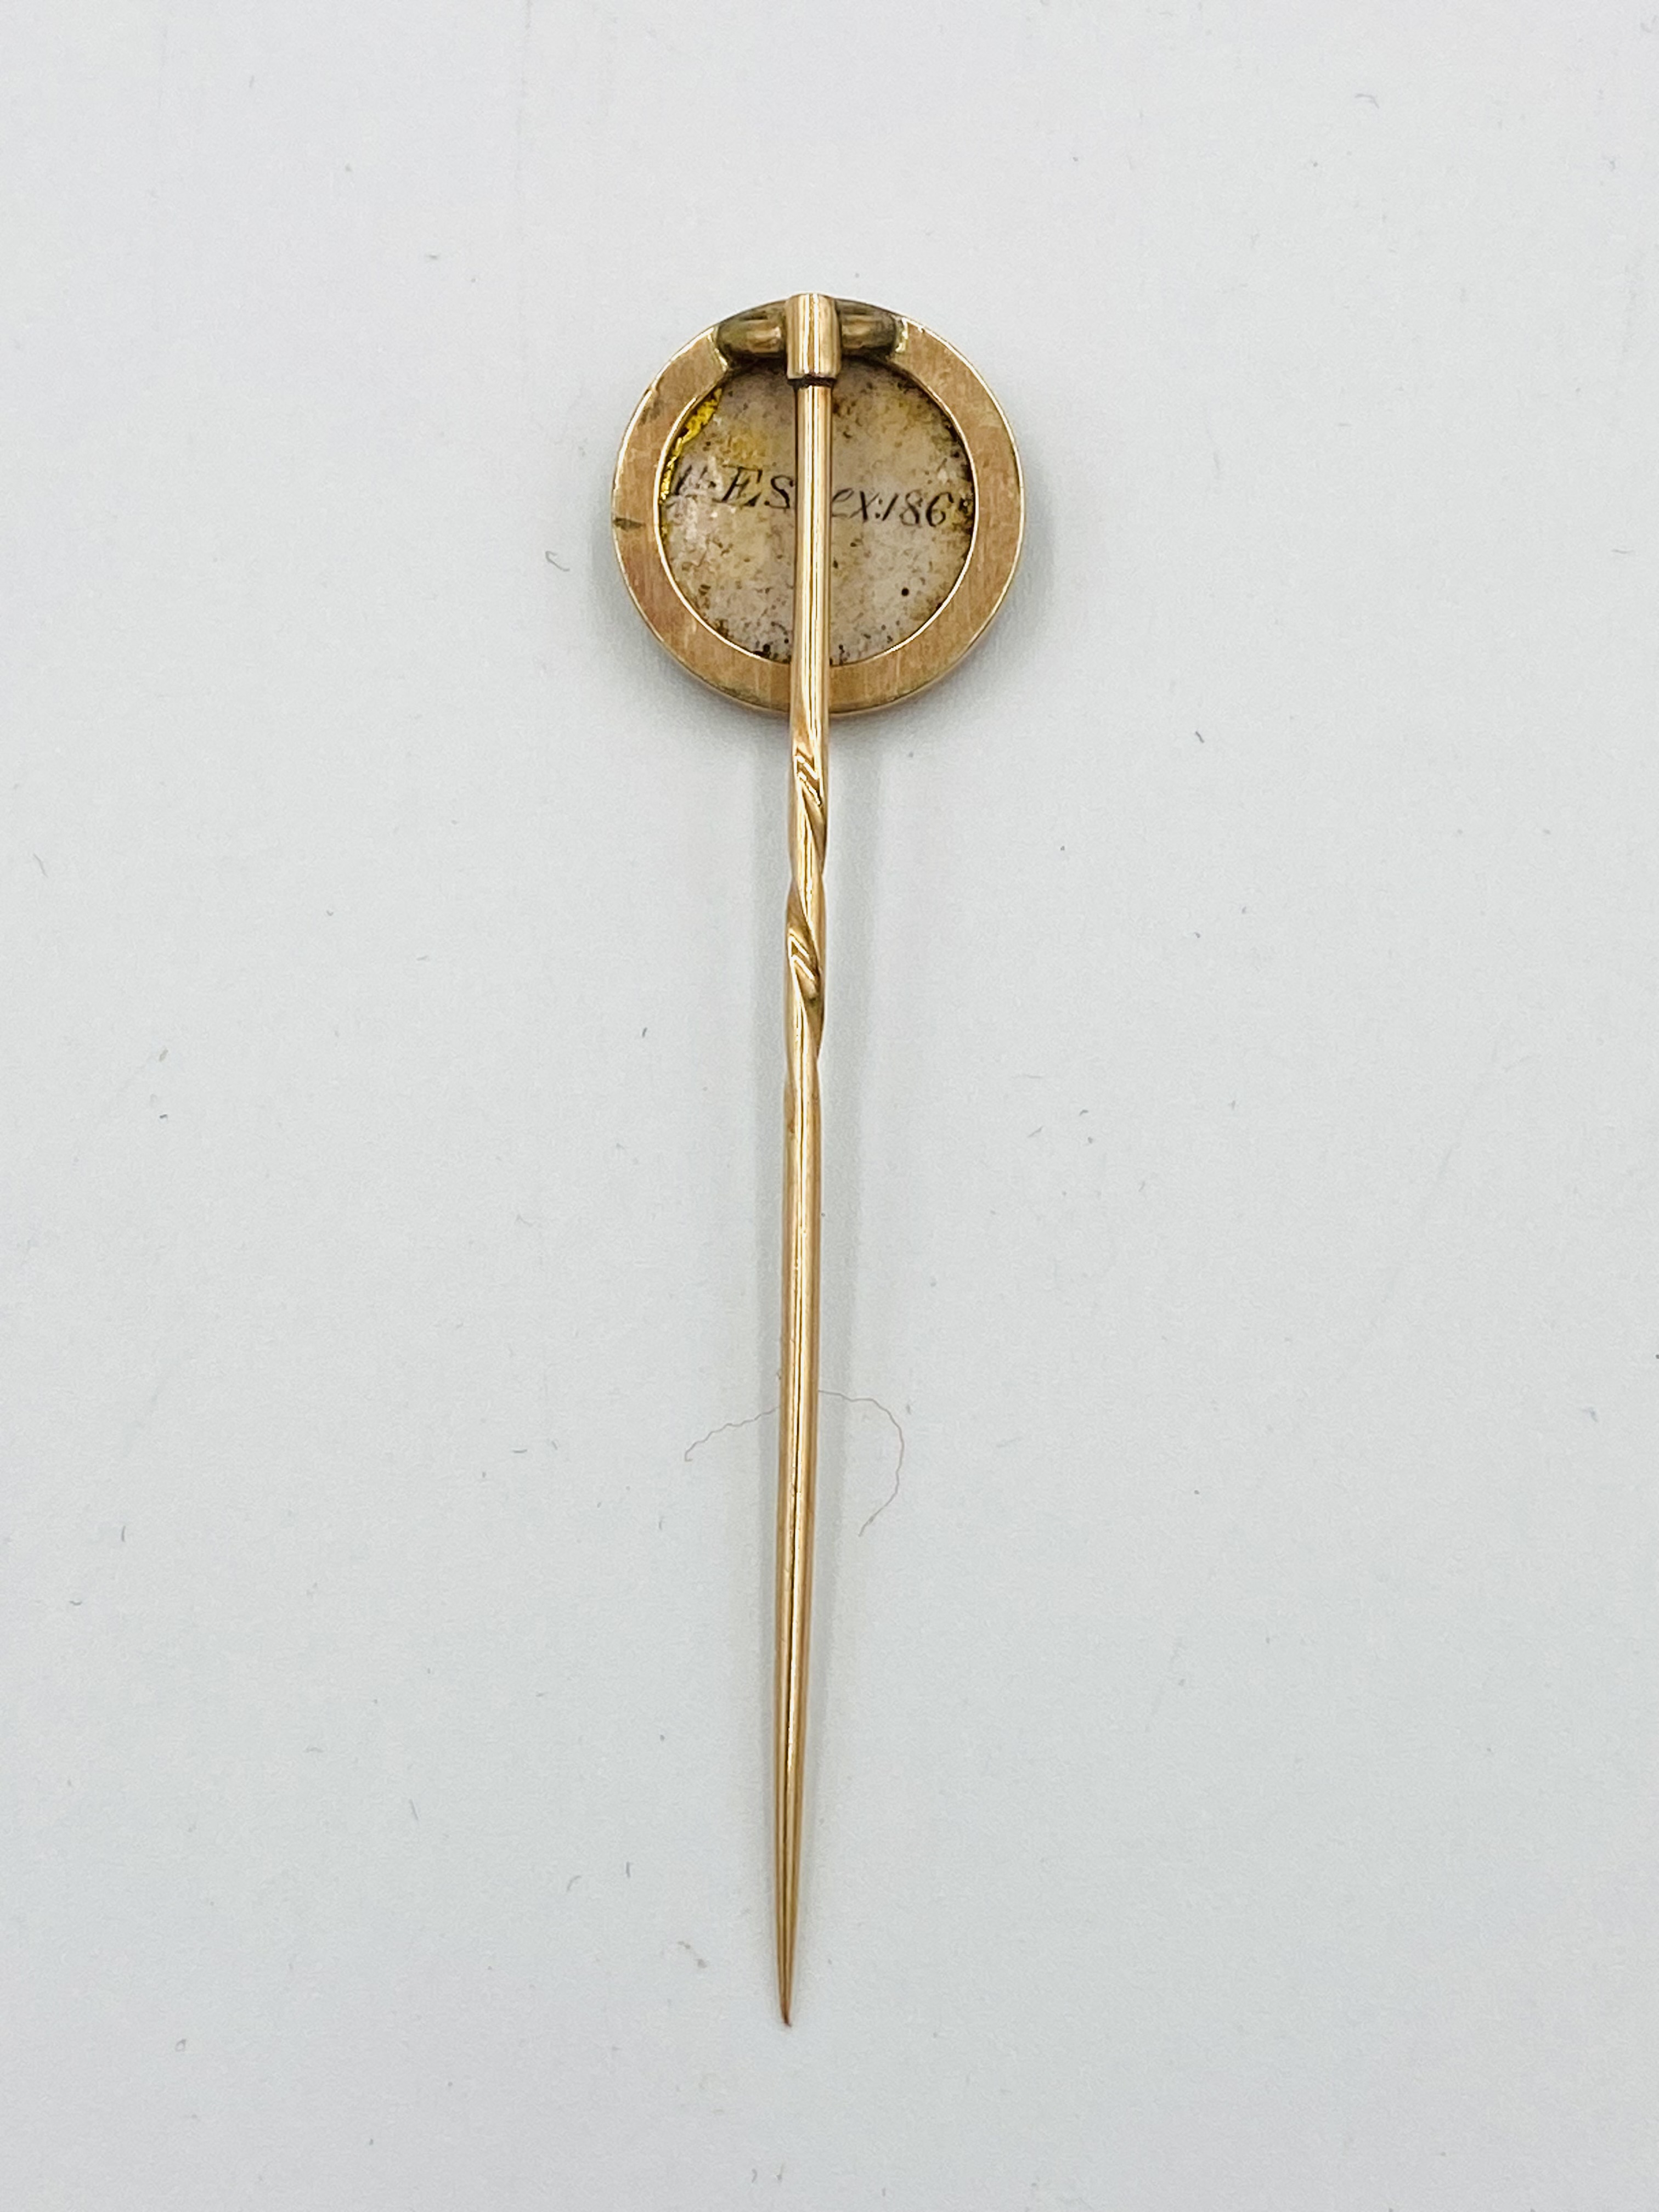 William Essex yellow metal stick pin - Image 4 of 5